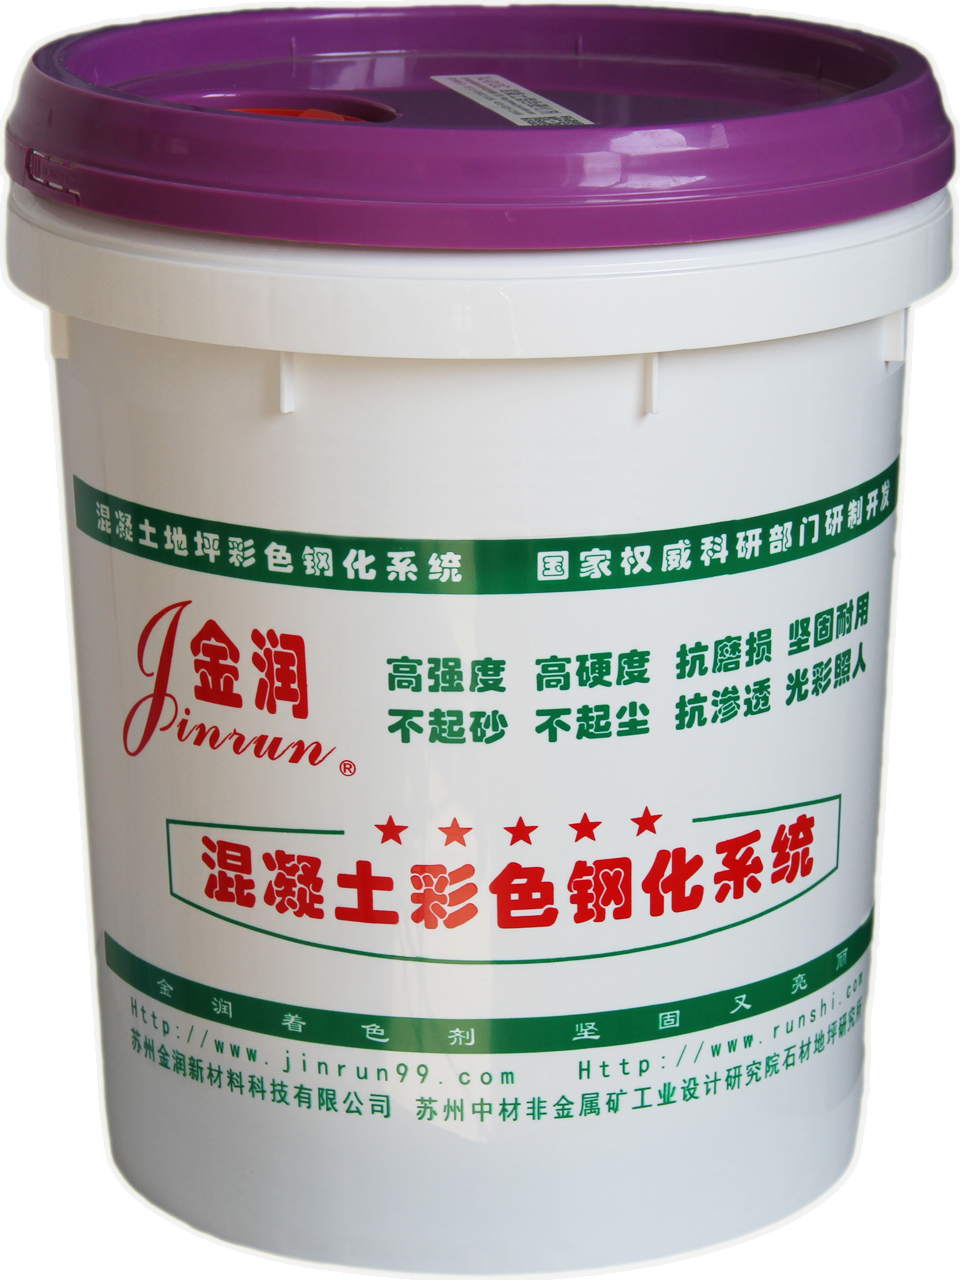 XJ-012C-金润混凝土固色硬化剂